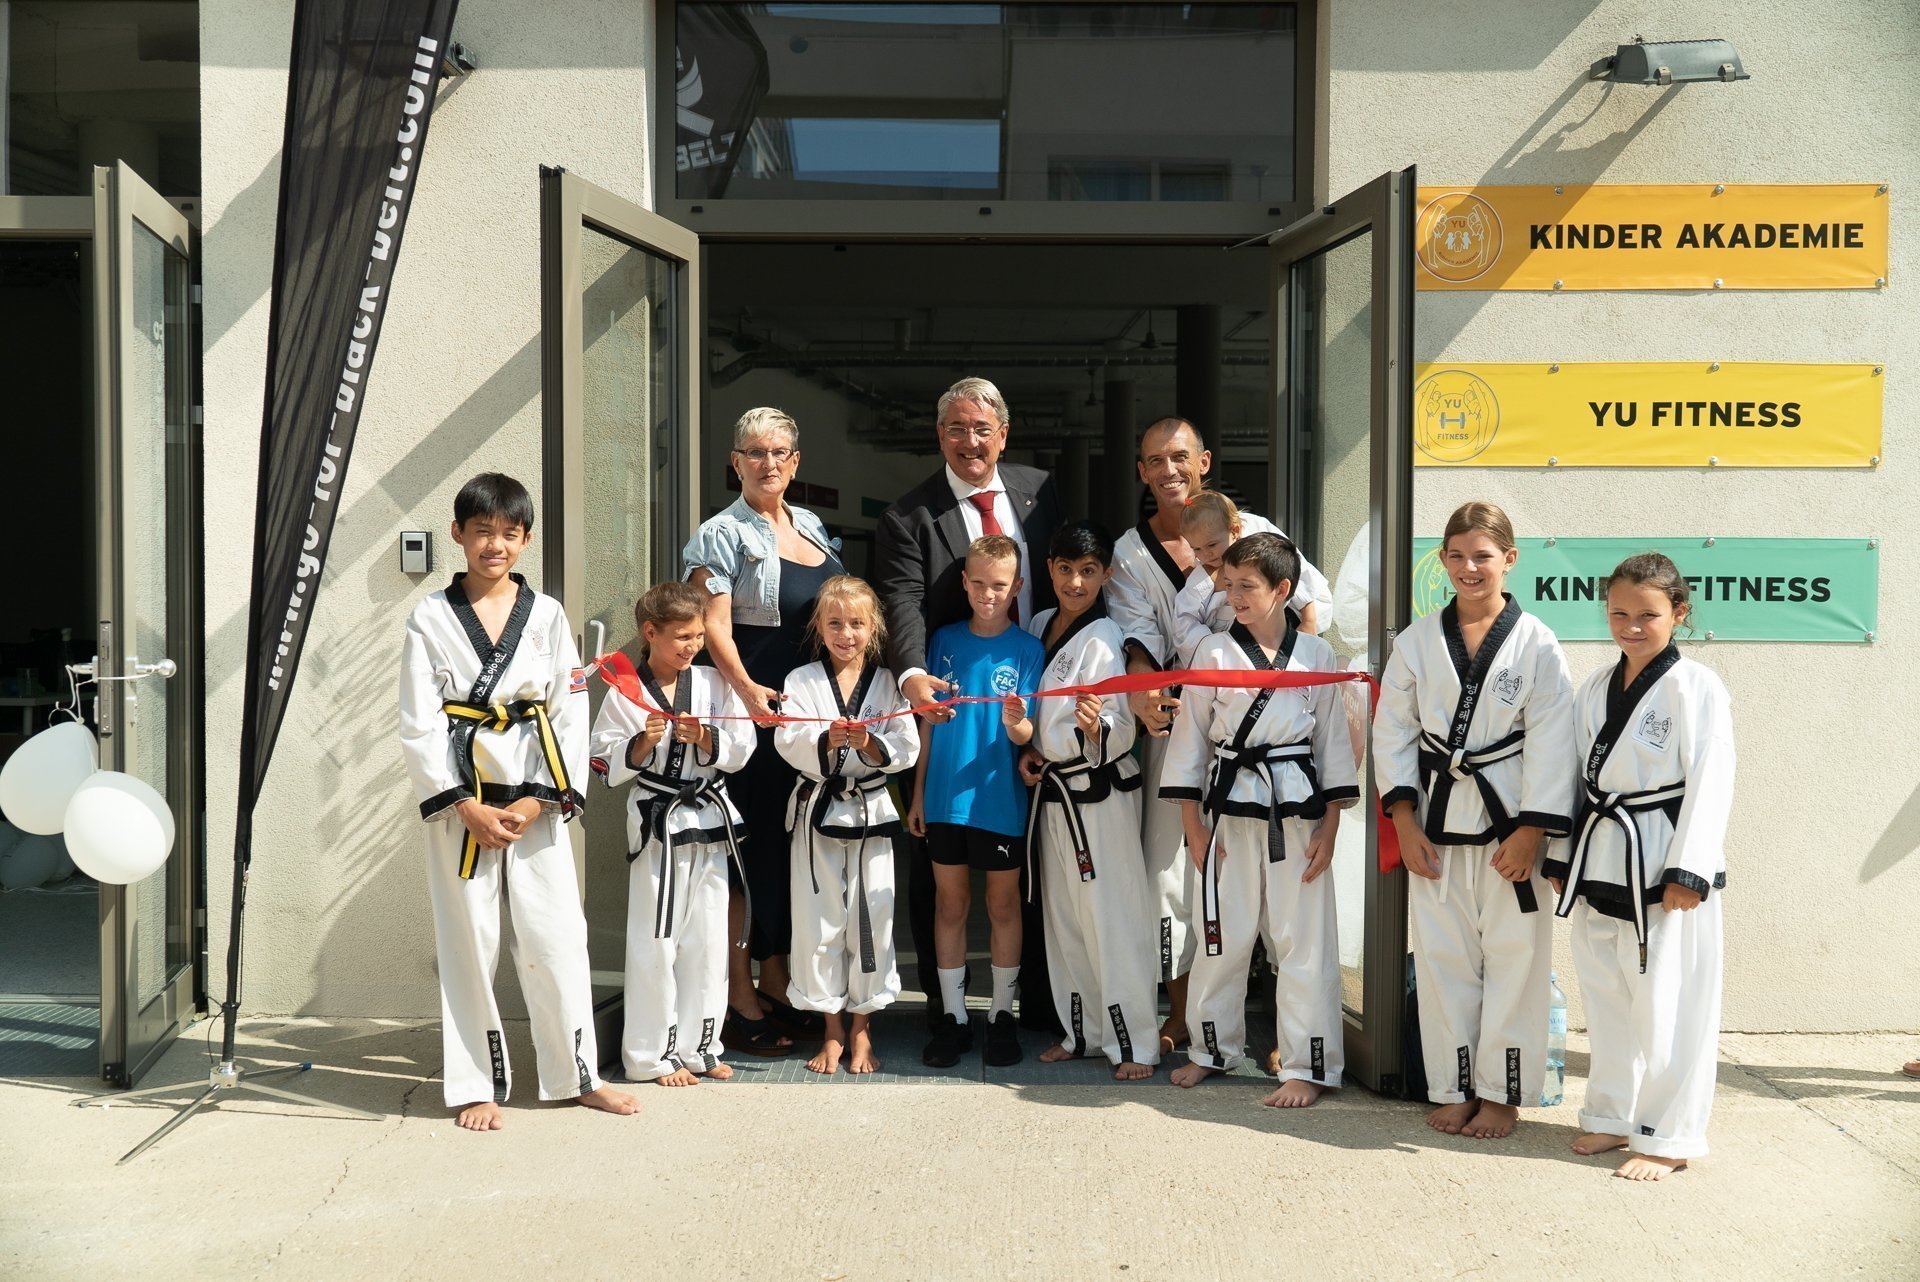 YOUNG-UNG Taekwondo BIG YU Kinderfitness Kampfsport Wagramer Straße